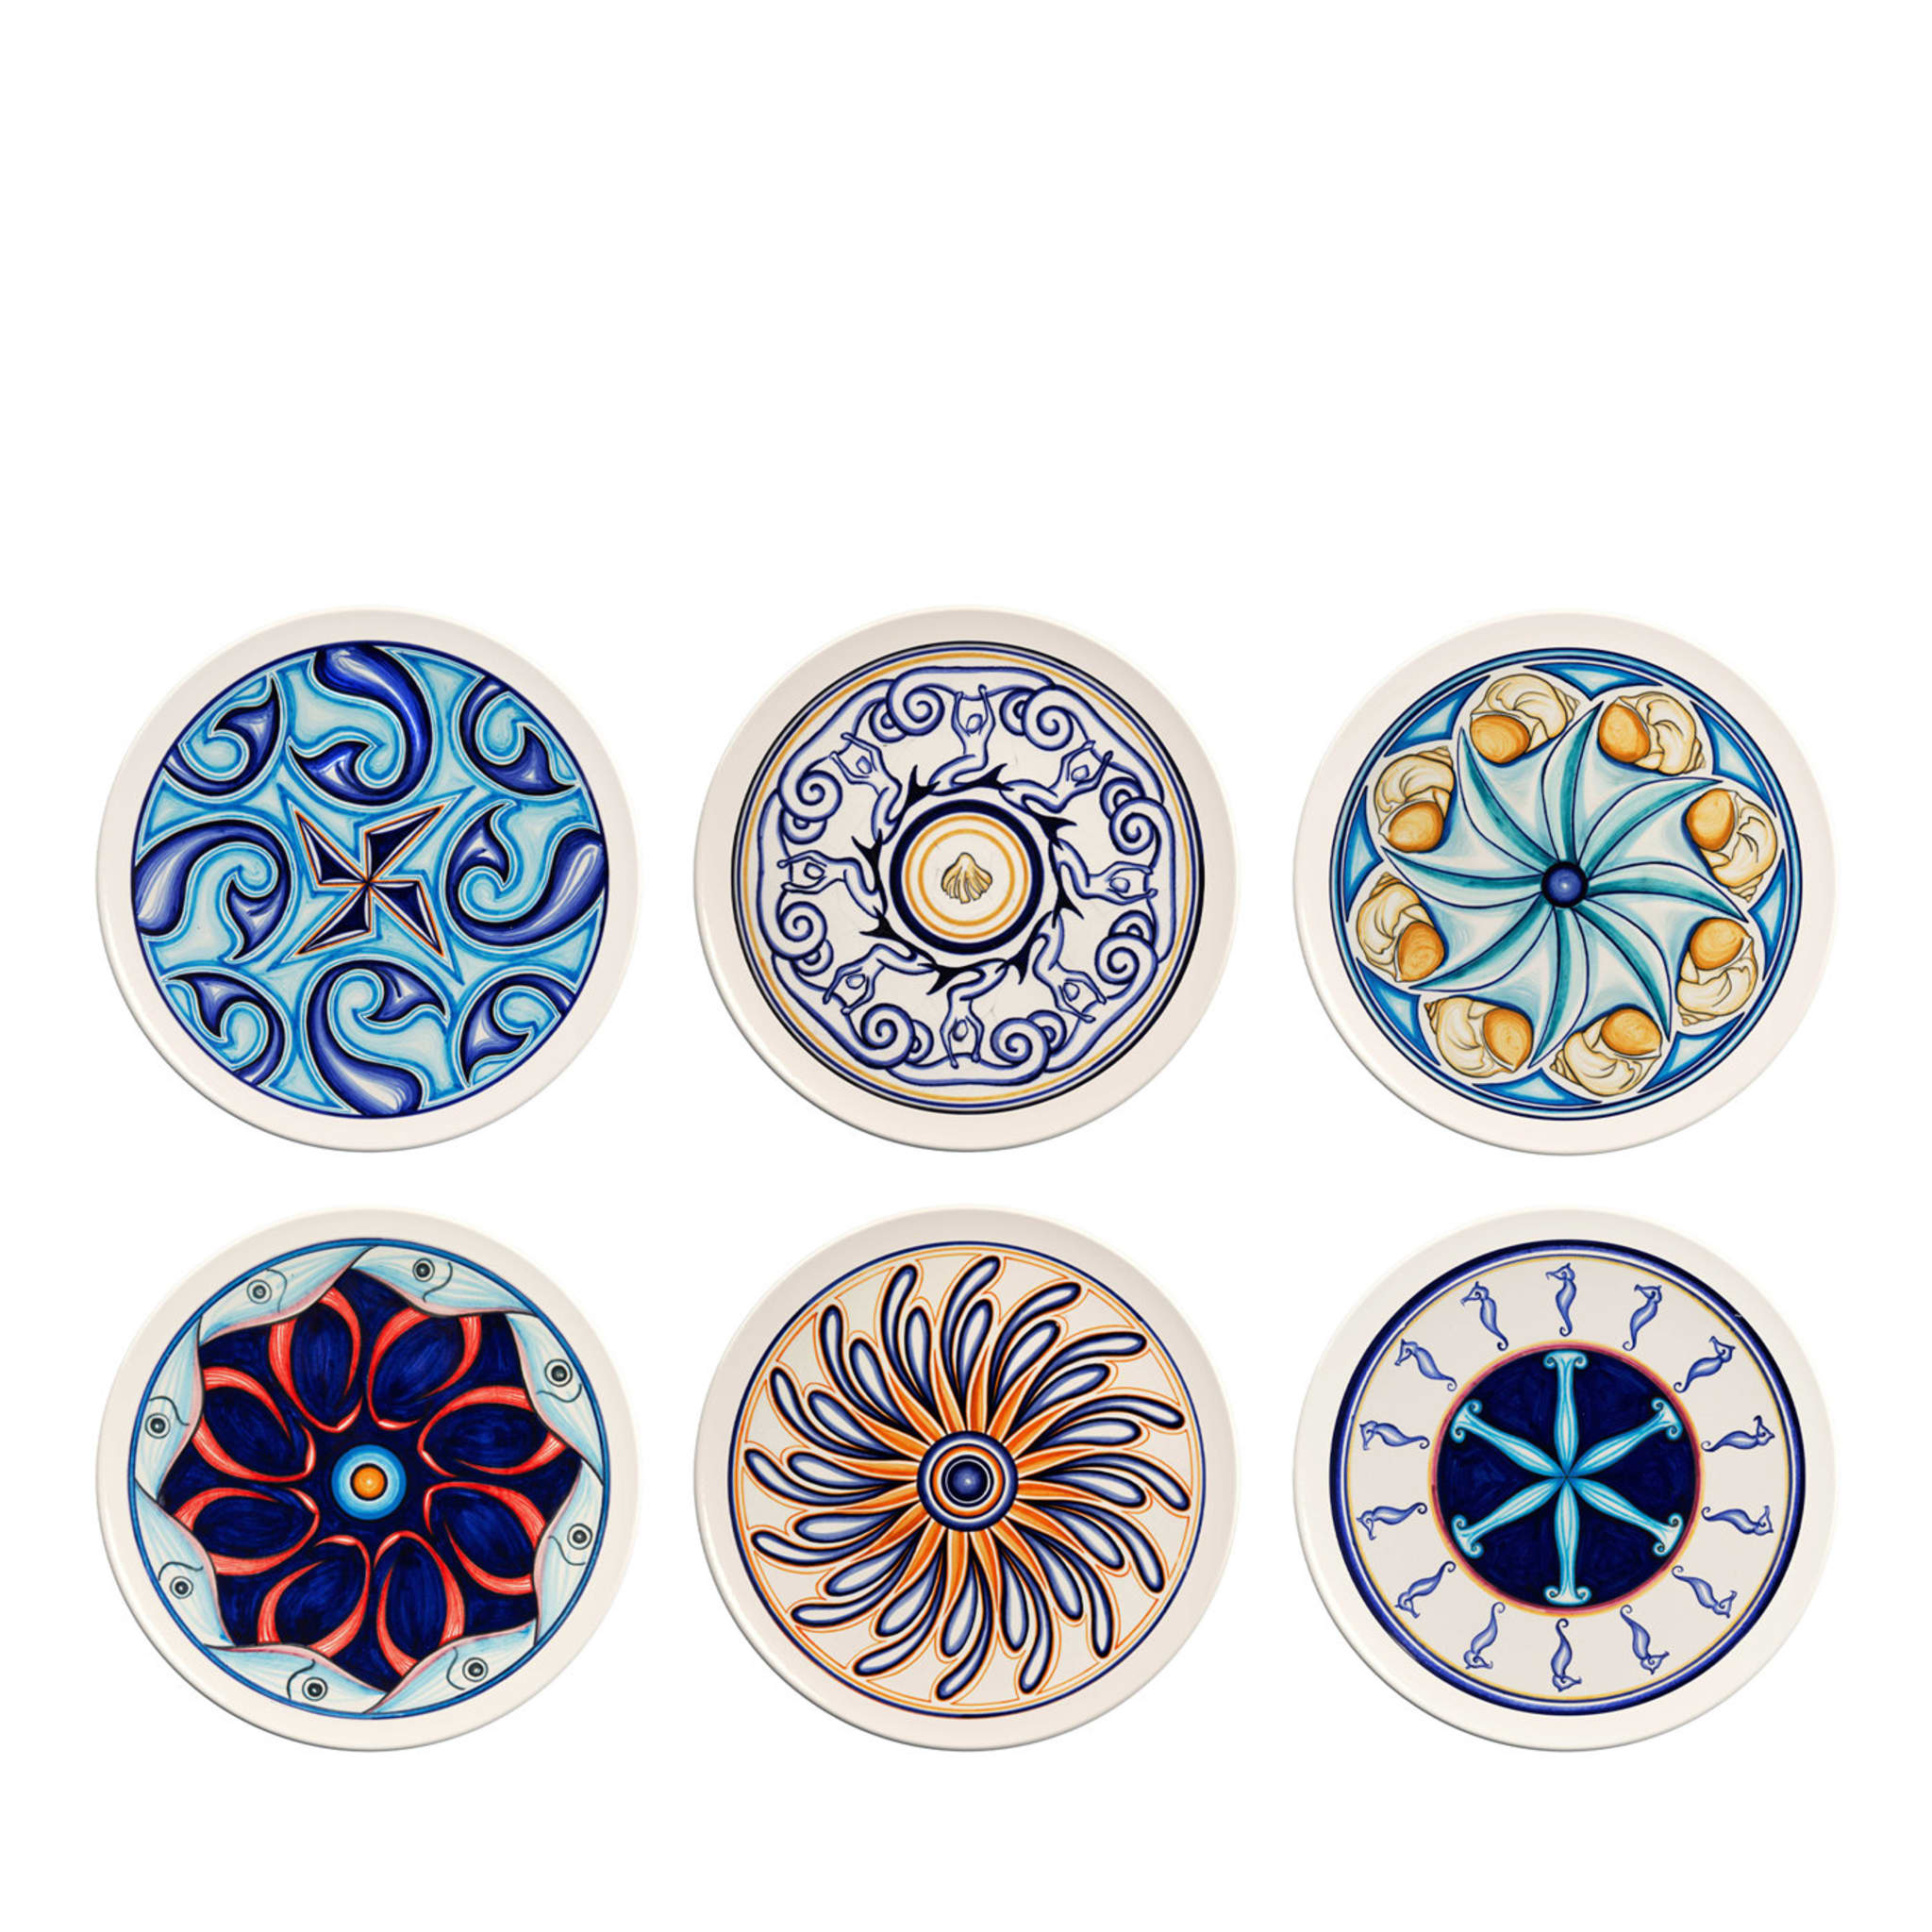 Colapesce Set of 6 Decorative Plates #2 - Main view